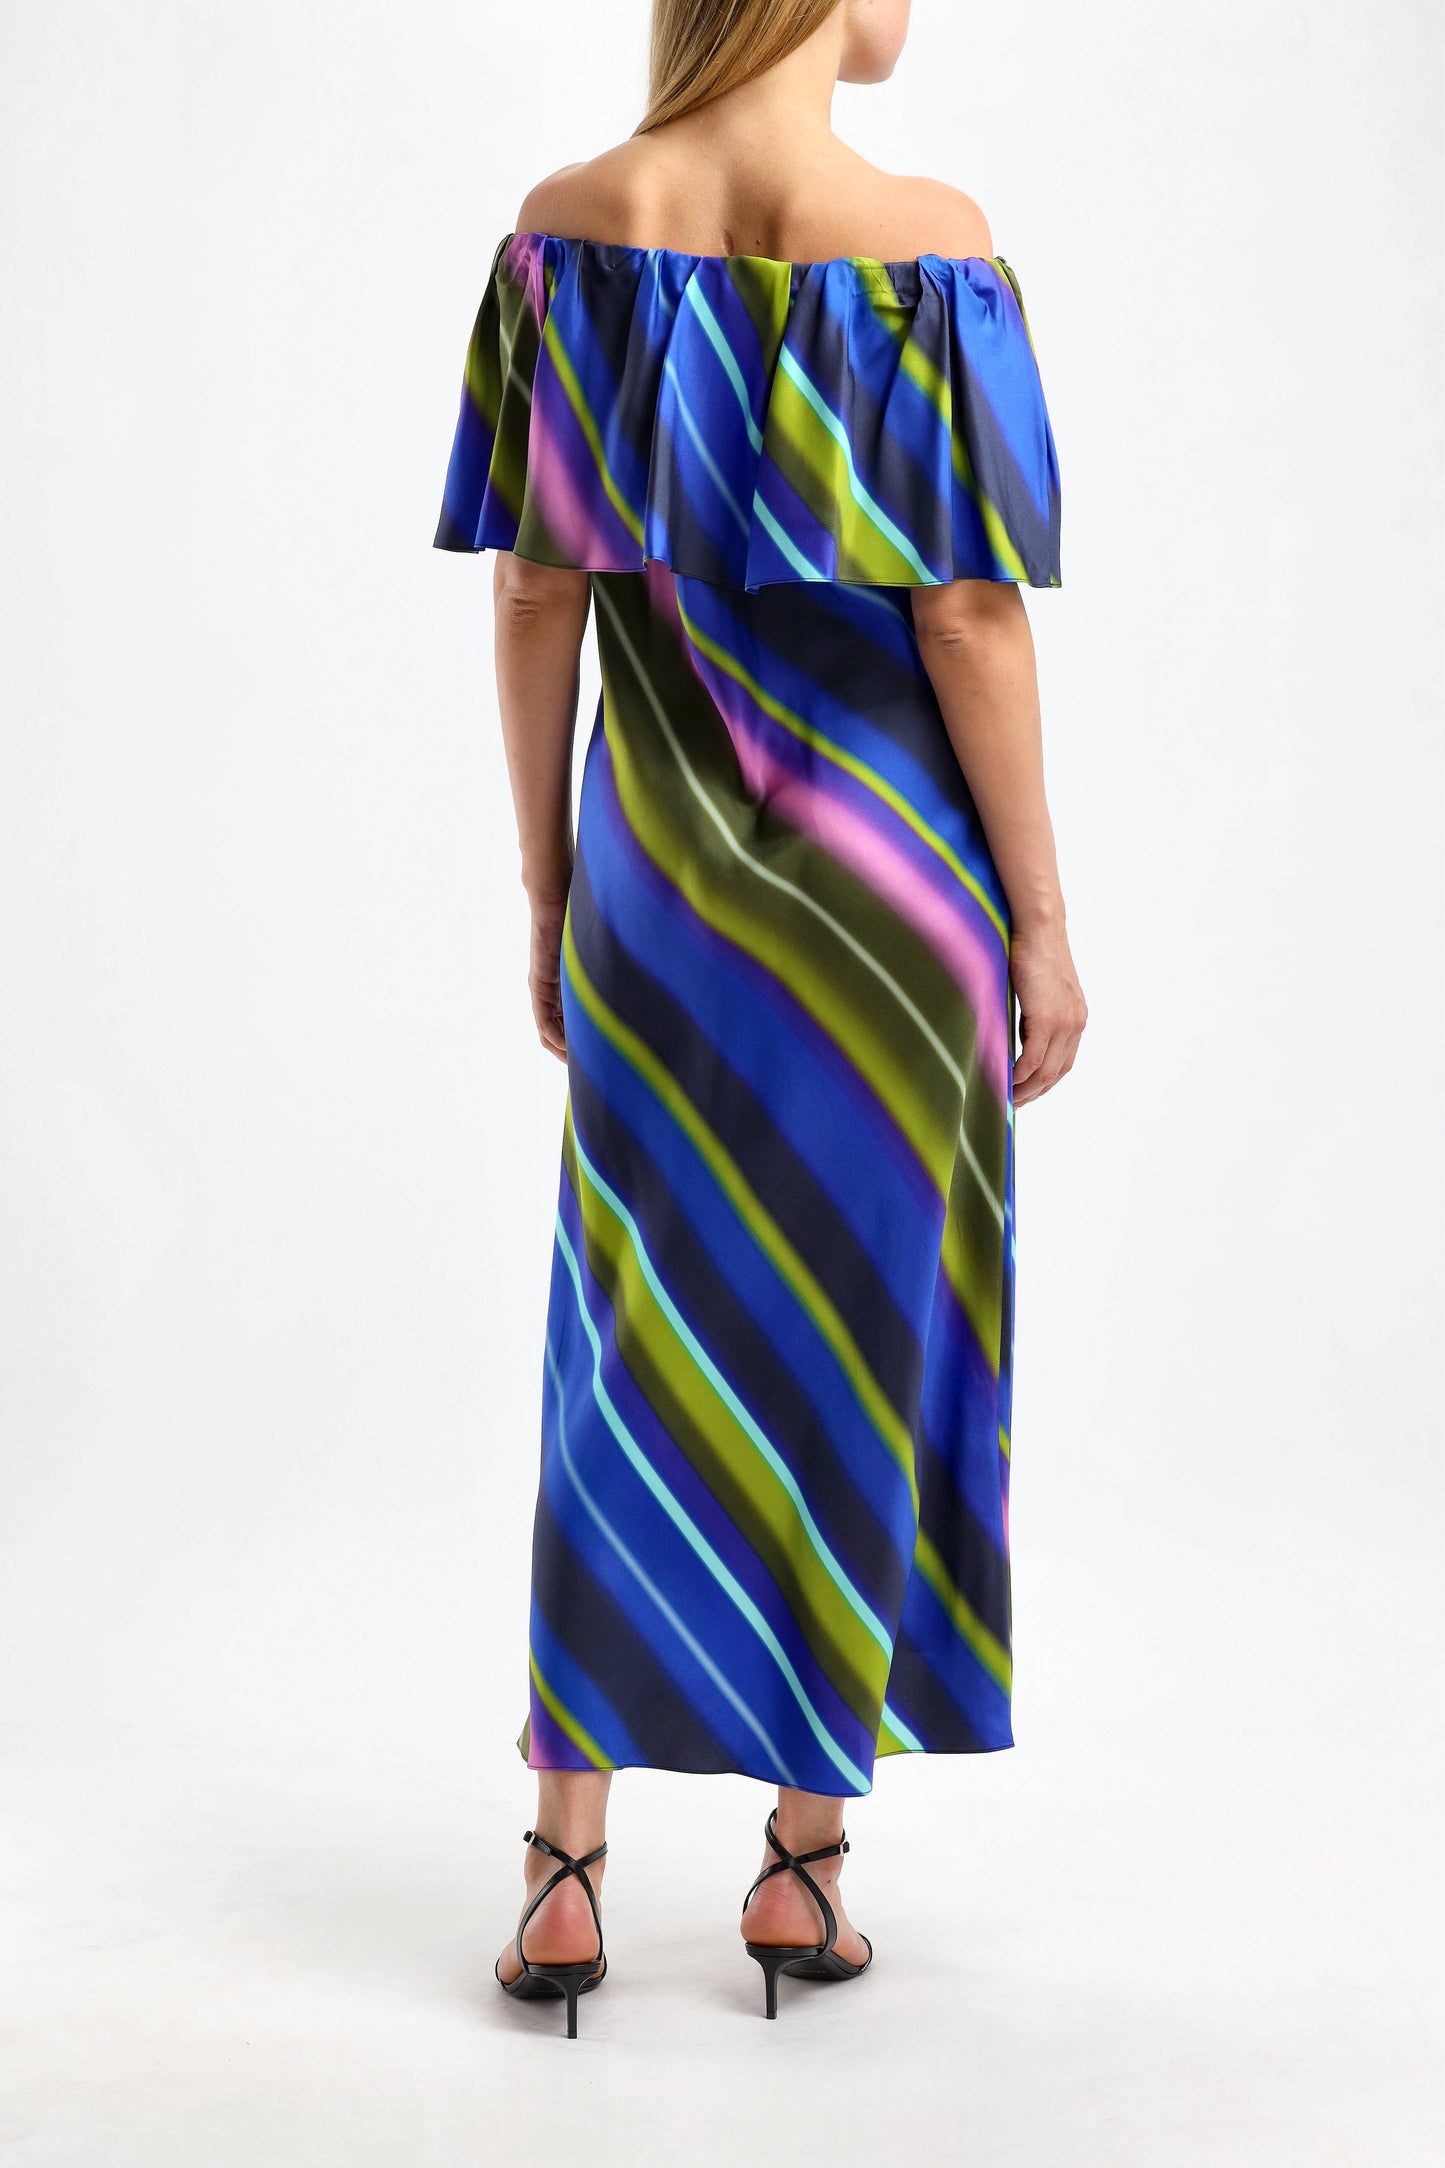 Kleid Citylight in Colorful StripesDorothee Schumacher - Anita Hass